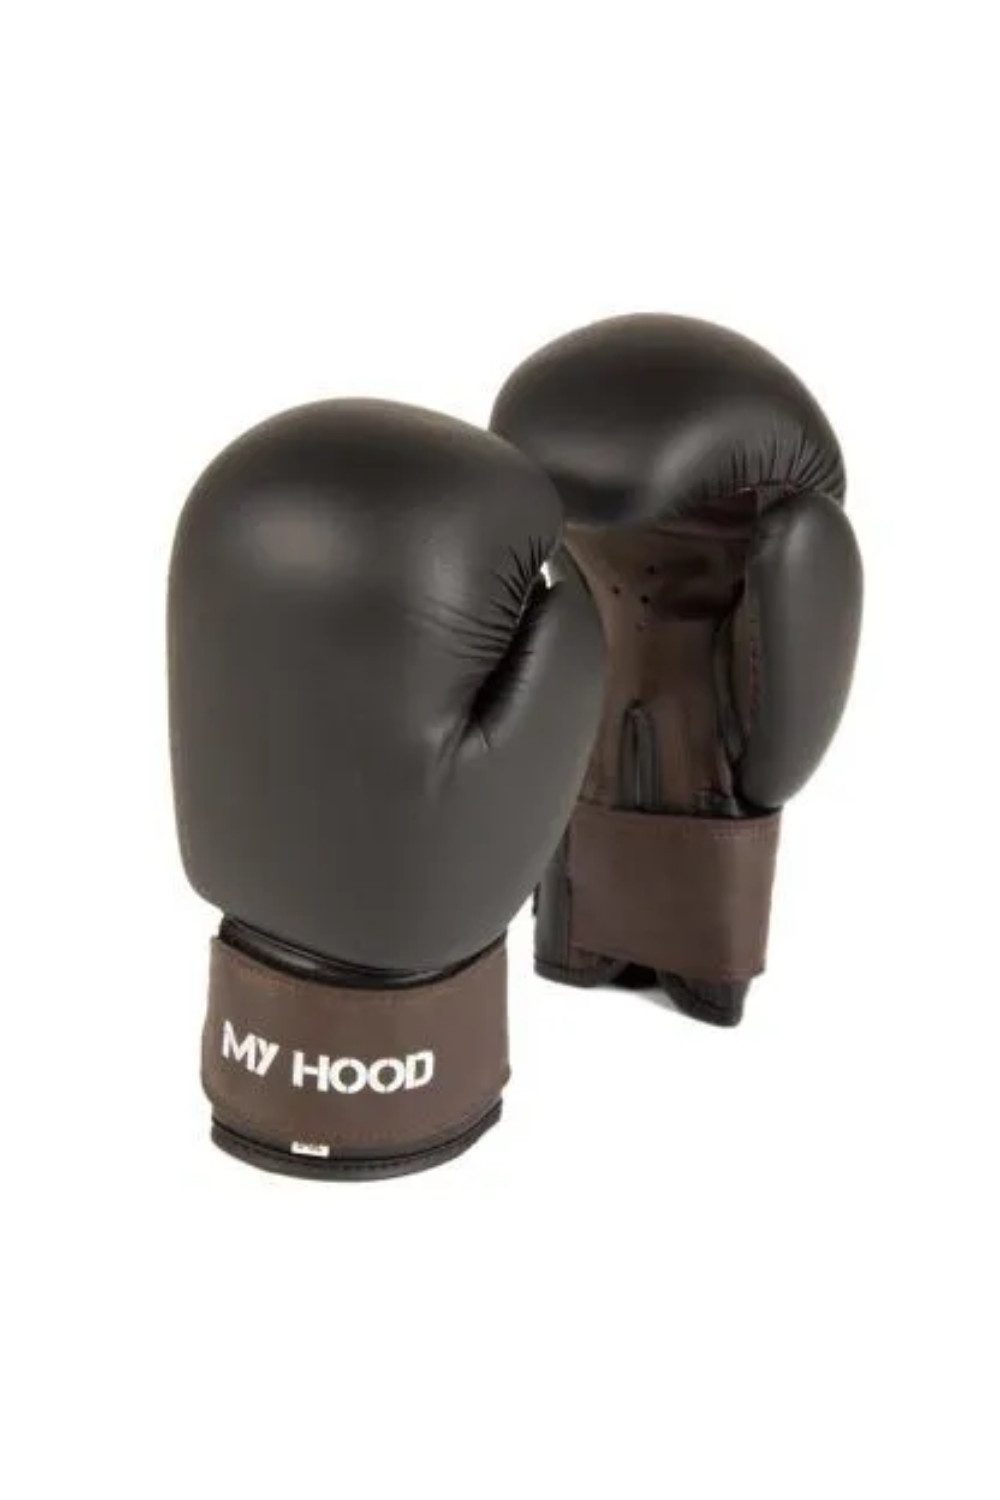 Boxhandschuhe 8 oz – Braun My Hood (Packung, 1 Paar), Kunstleder